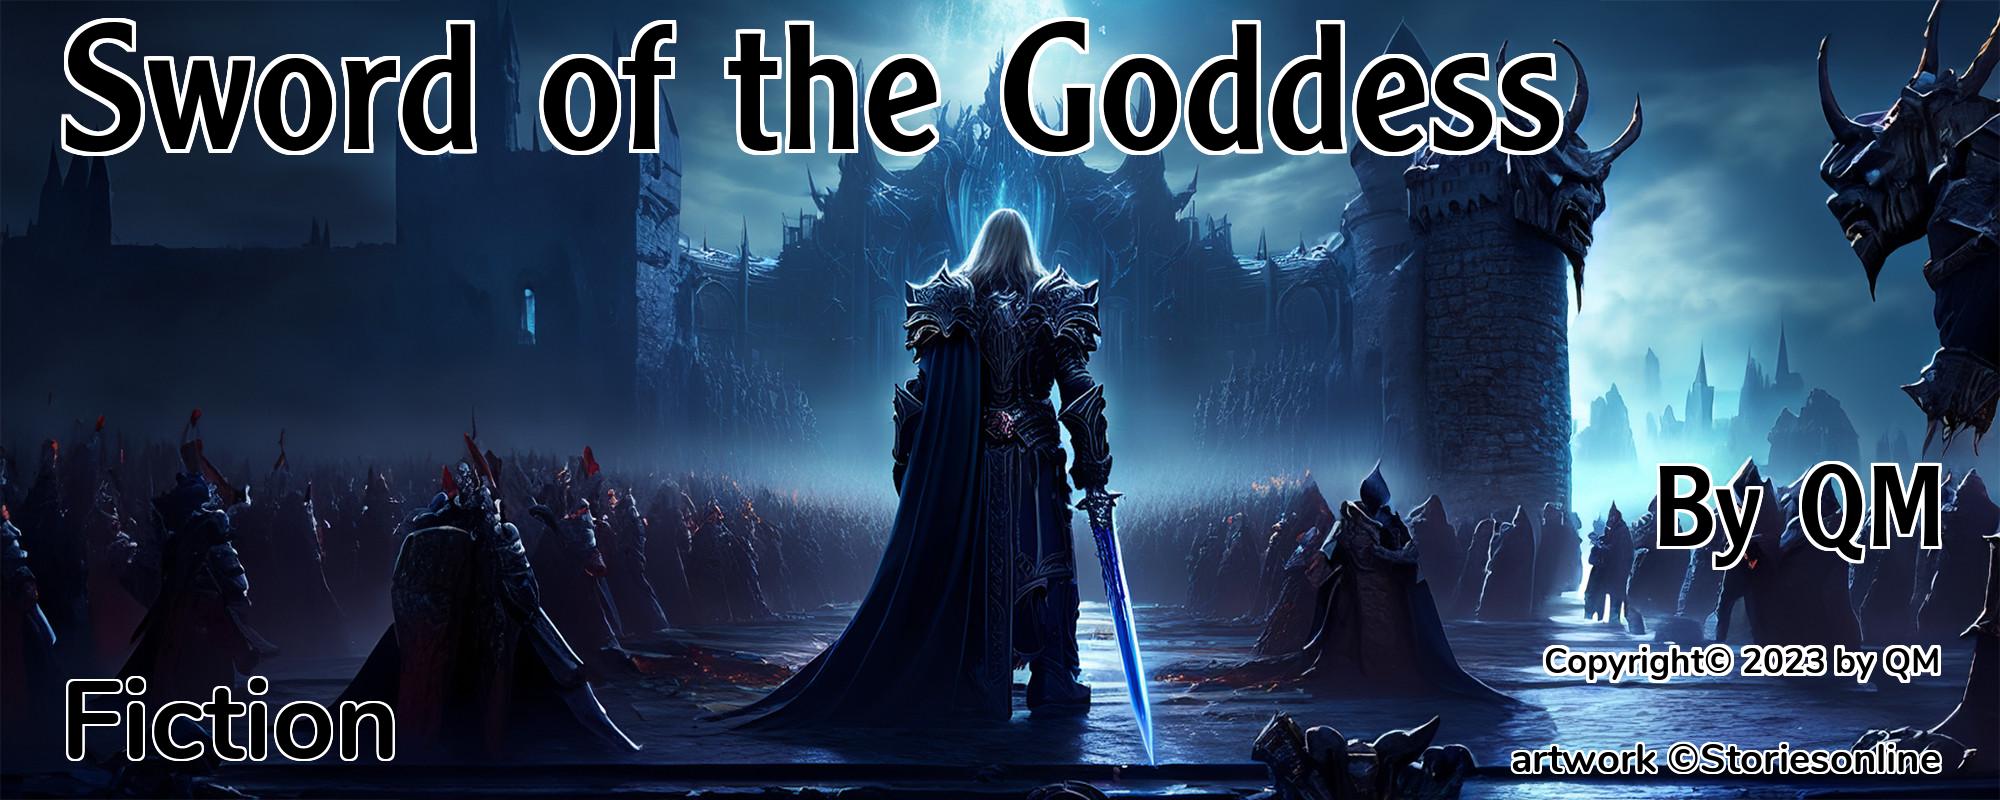 Sword of the Goddess - Cover